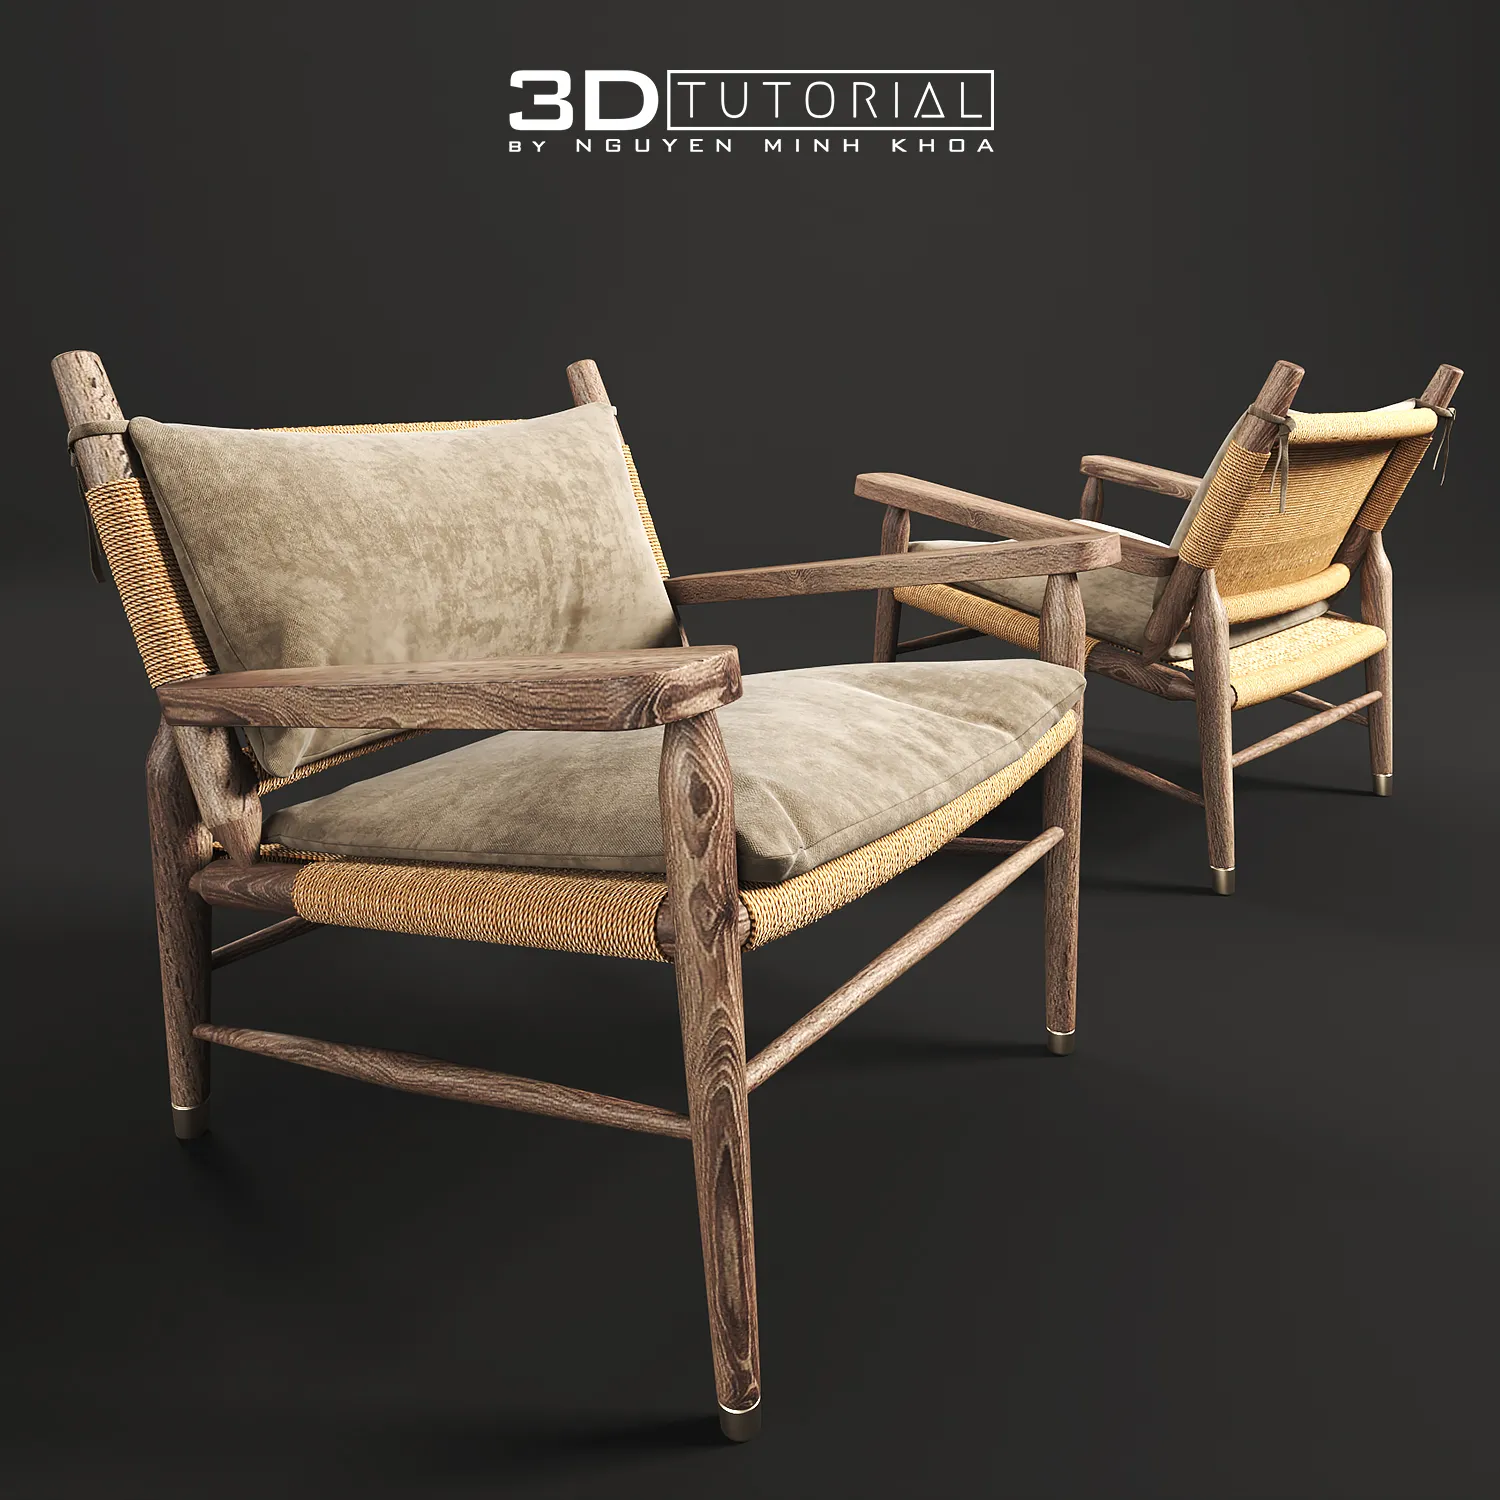 FURNITURE 3D MODELS – Rope chair modebyNguyenMinhKhoa